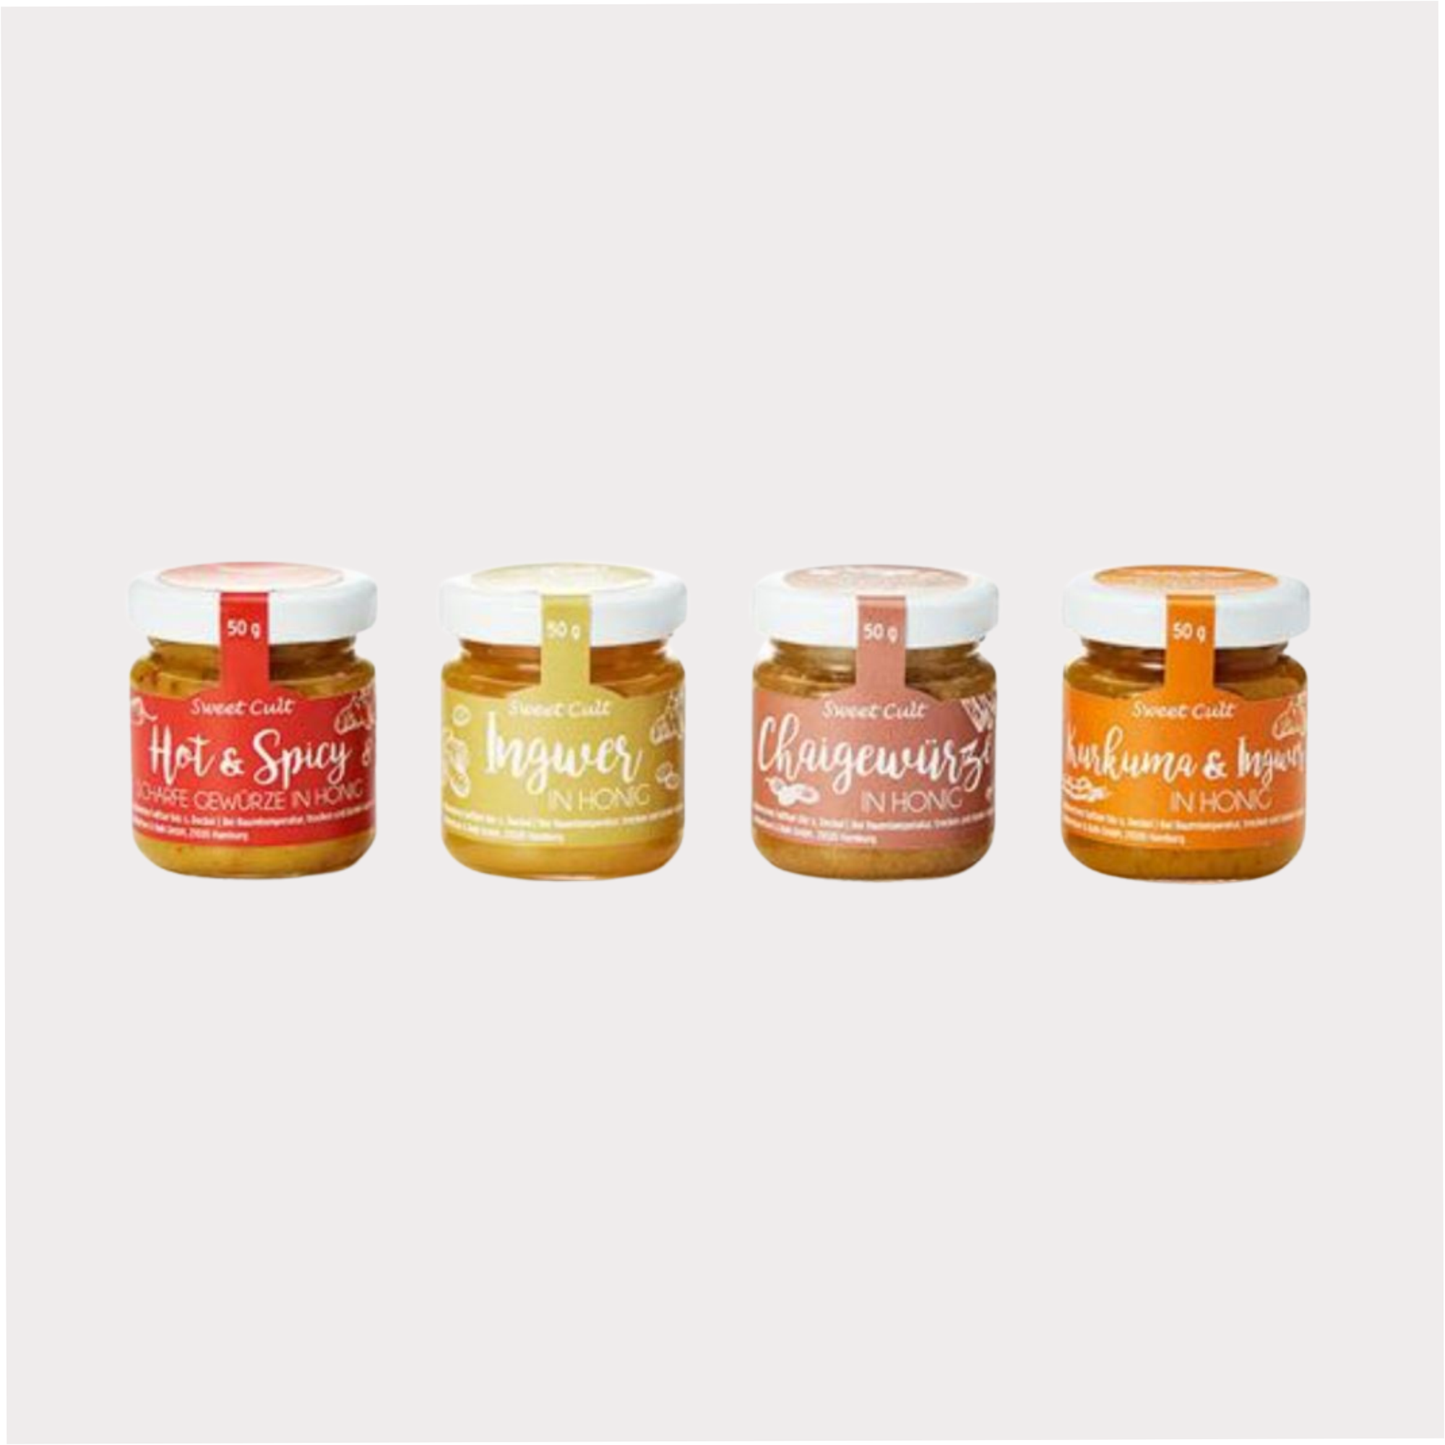 Honigsortiment Sonnenblume, 4 fach sortiert: Ingwer in Honig, Hot & Spicy Chai, Kurkuma-Ingwer 24 Gläser à 50 Gramm